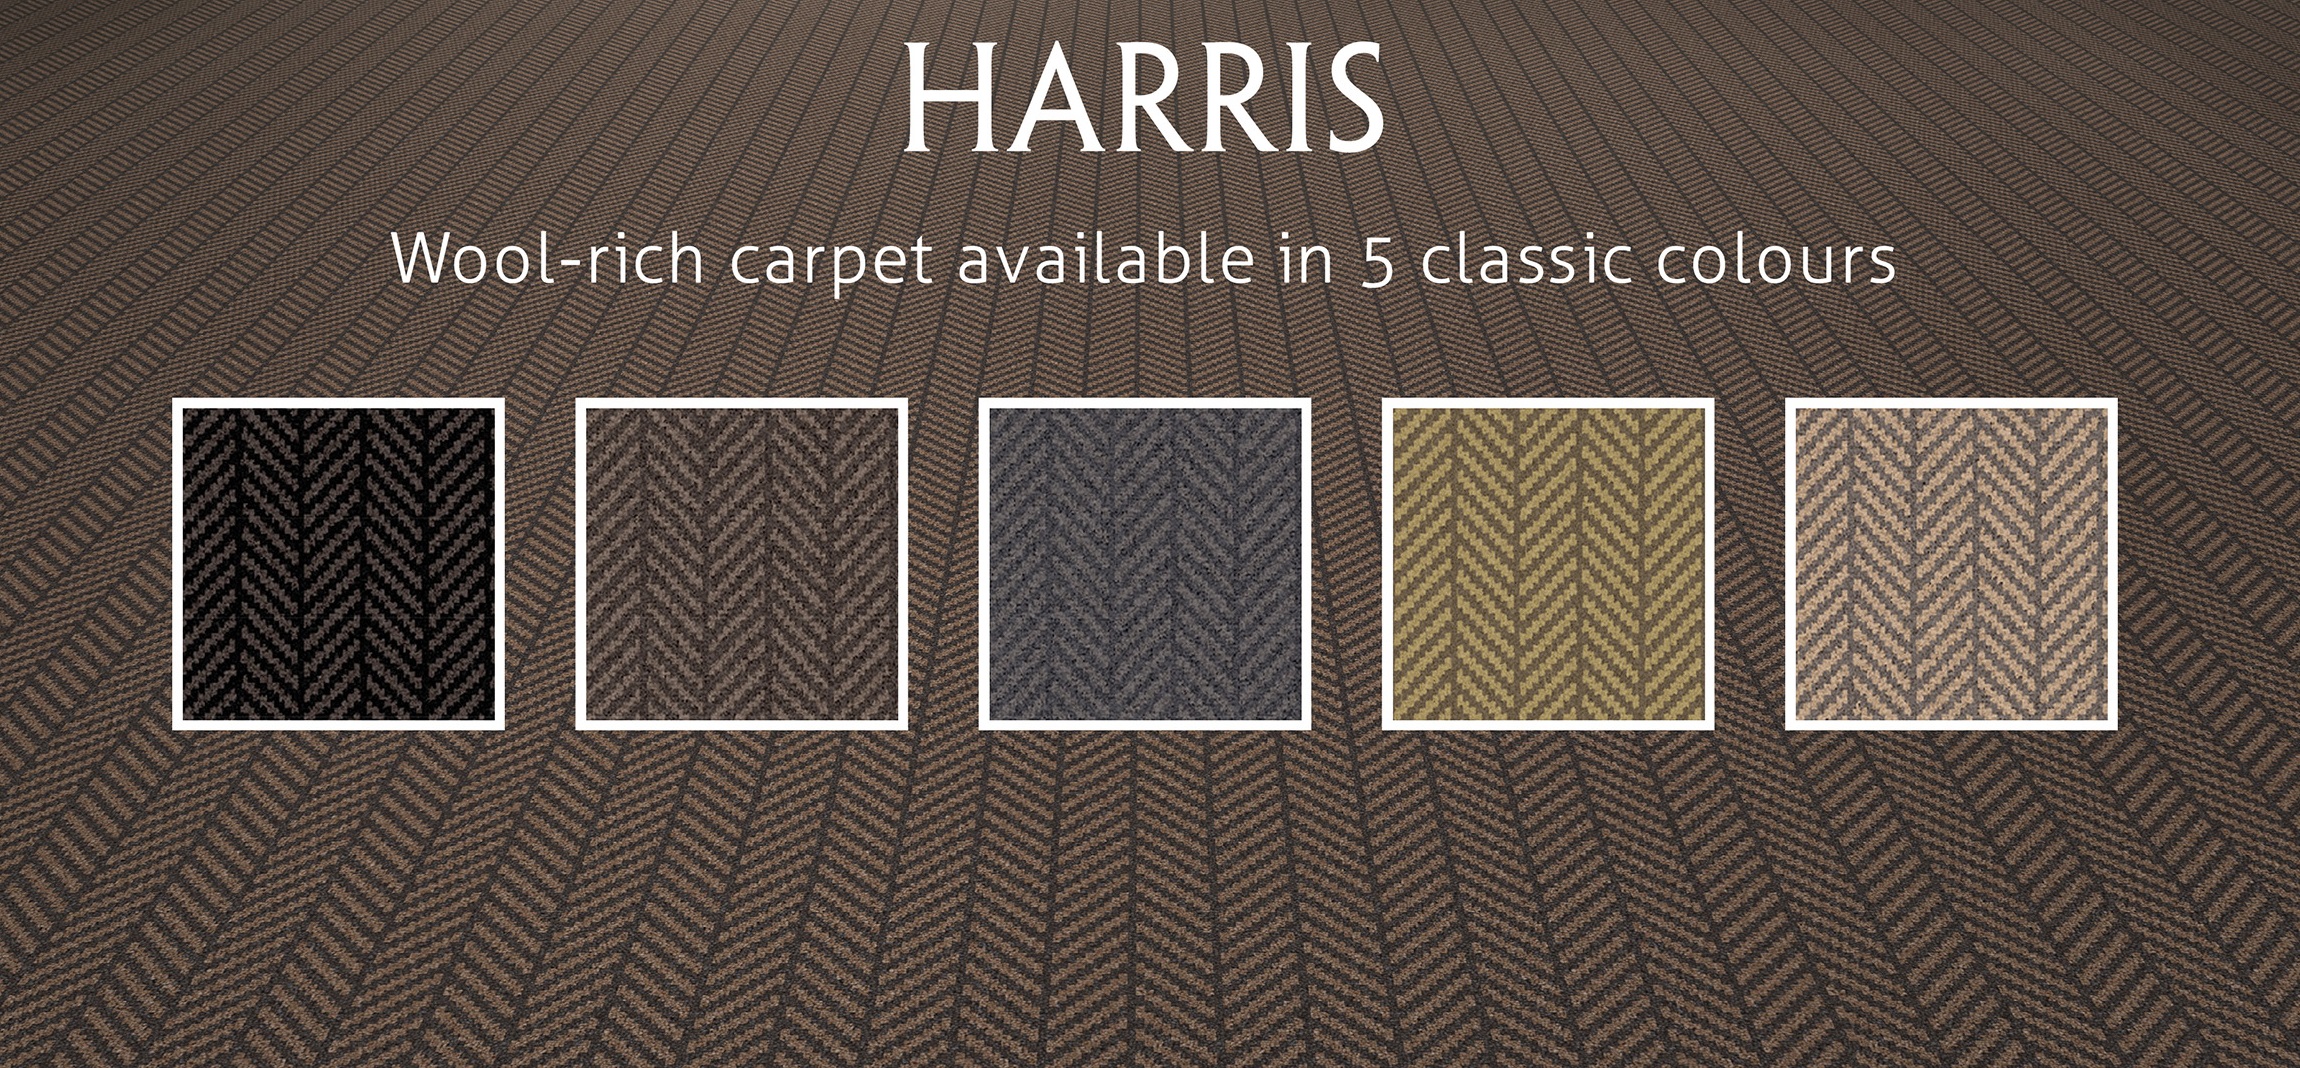 Harris by Wilton Carpets